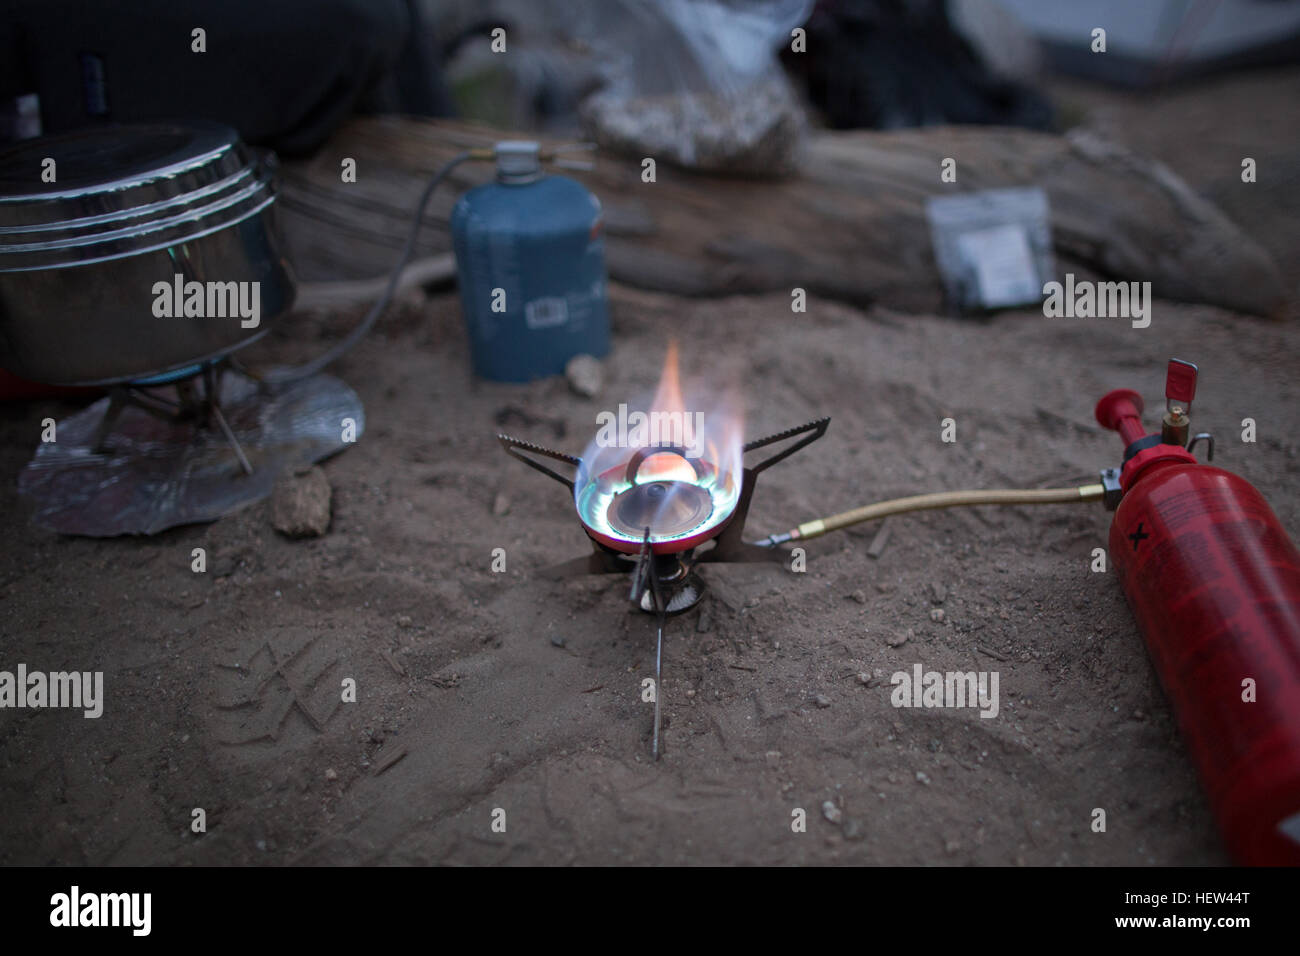 Lit camping stove Stock Photo